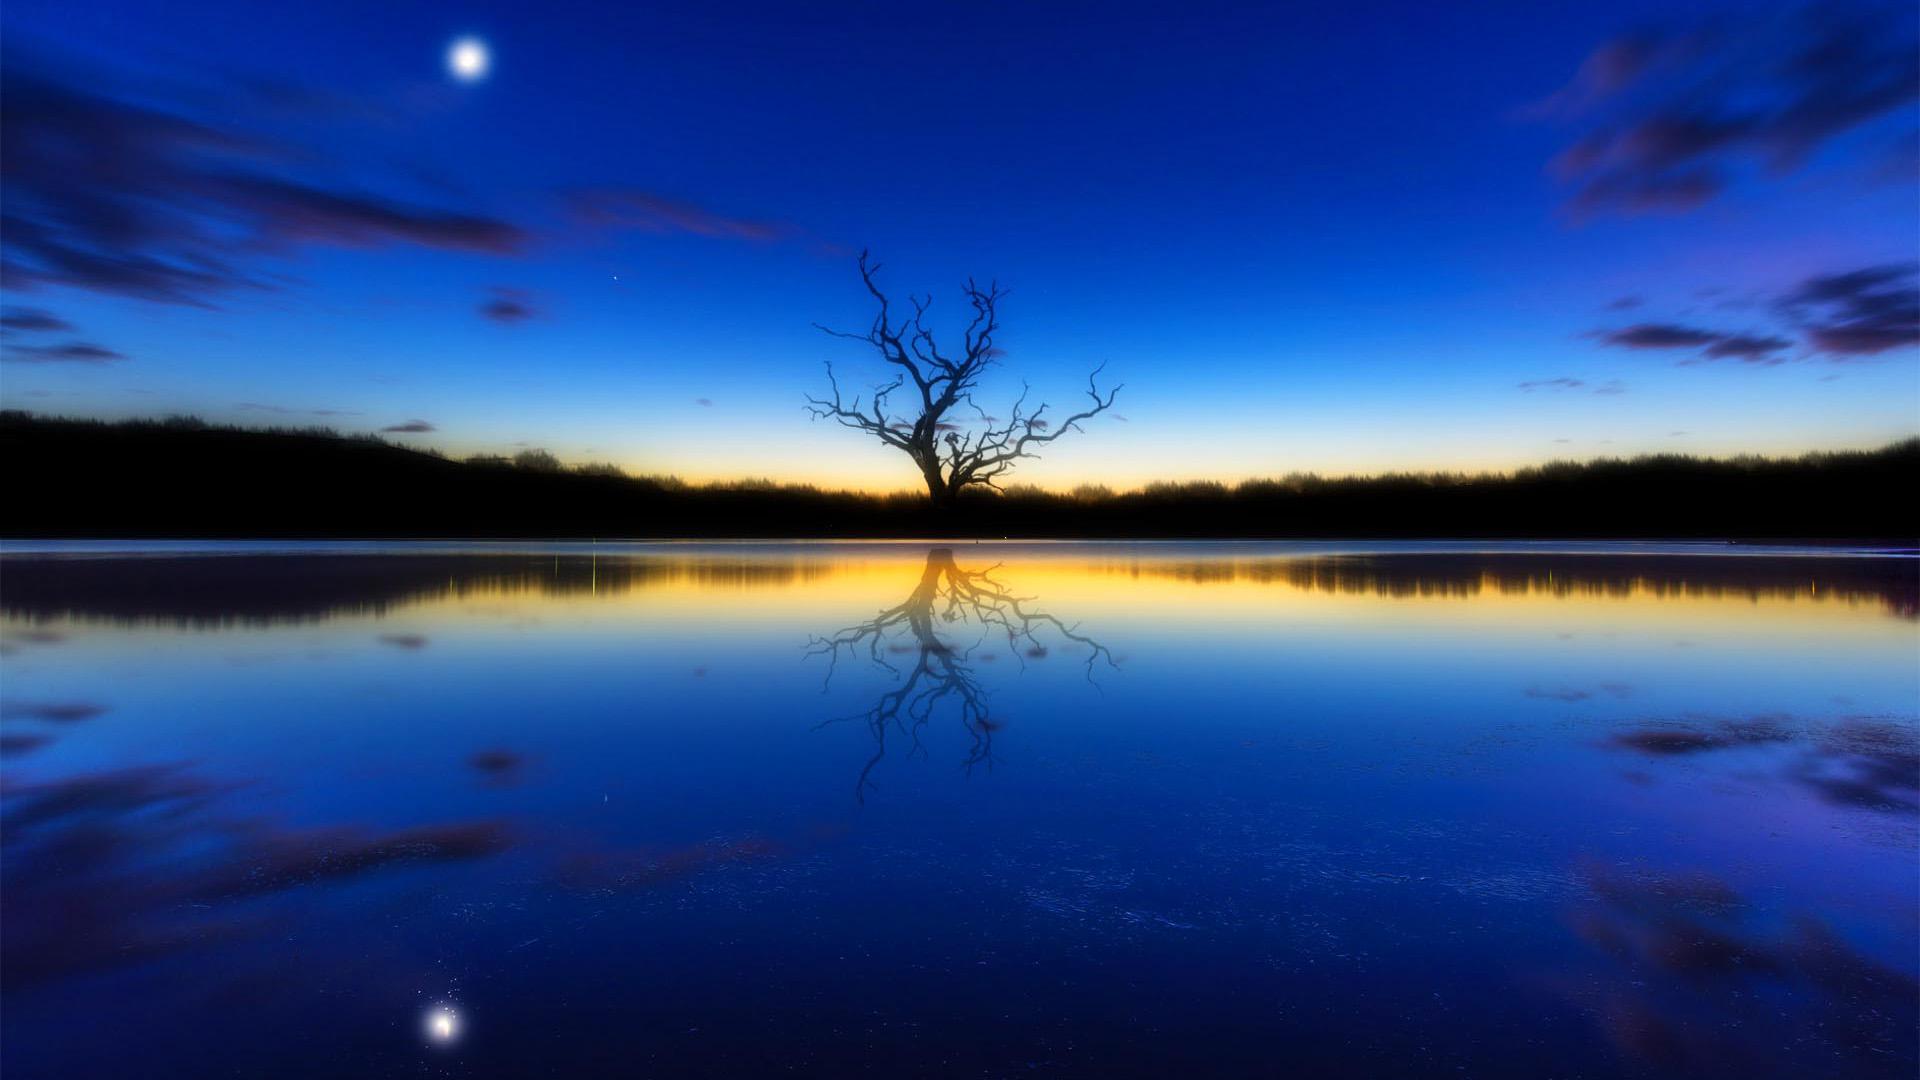 Blue landscape, a tree, reflecting, river, sunset, moon, Landscape